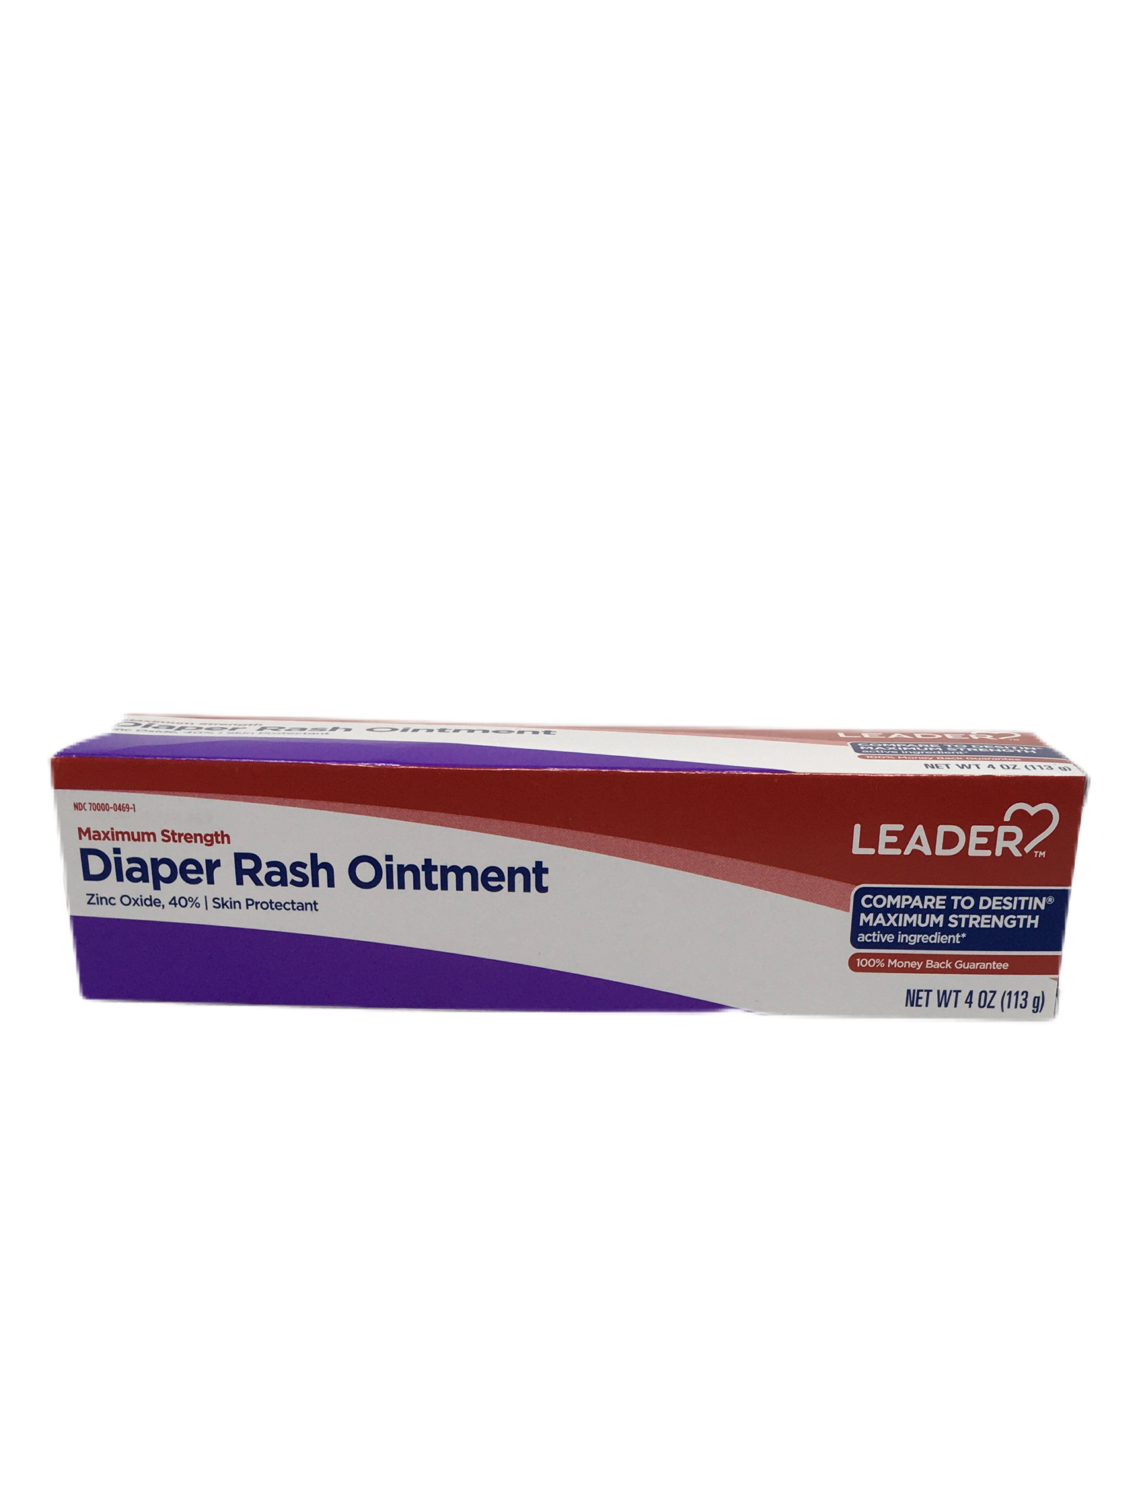 Diaper Rash Ointment Leader